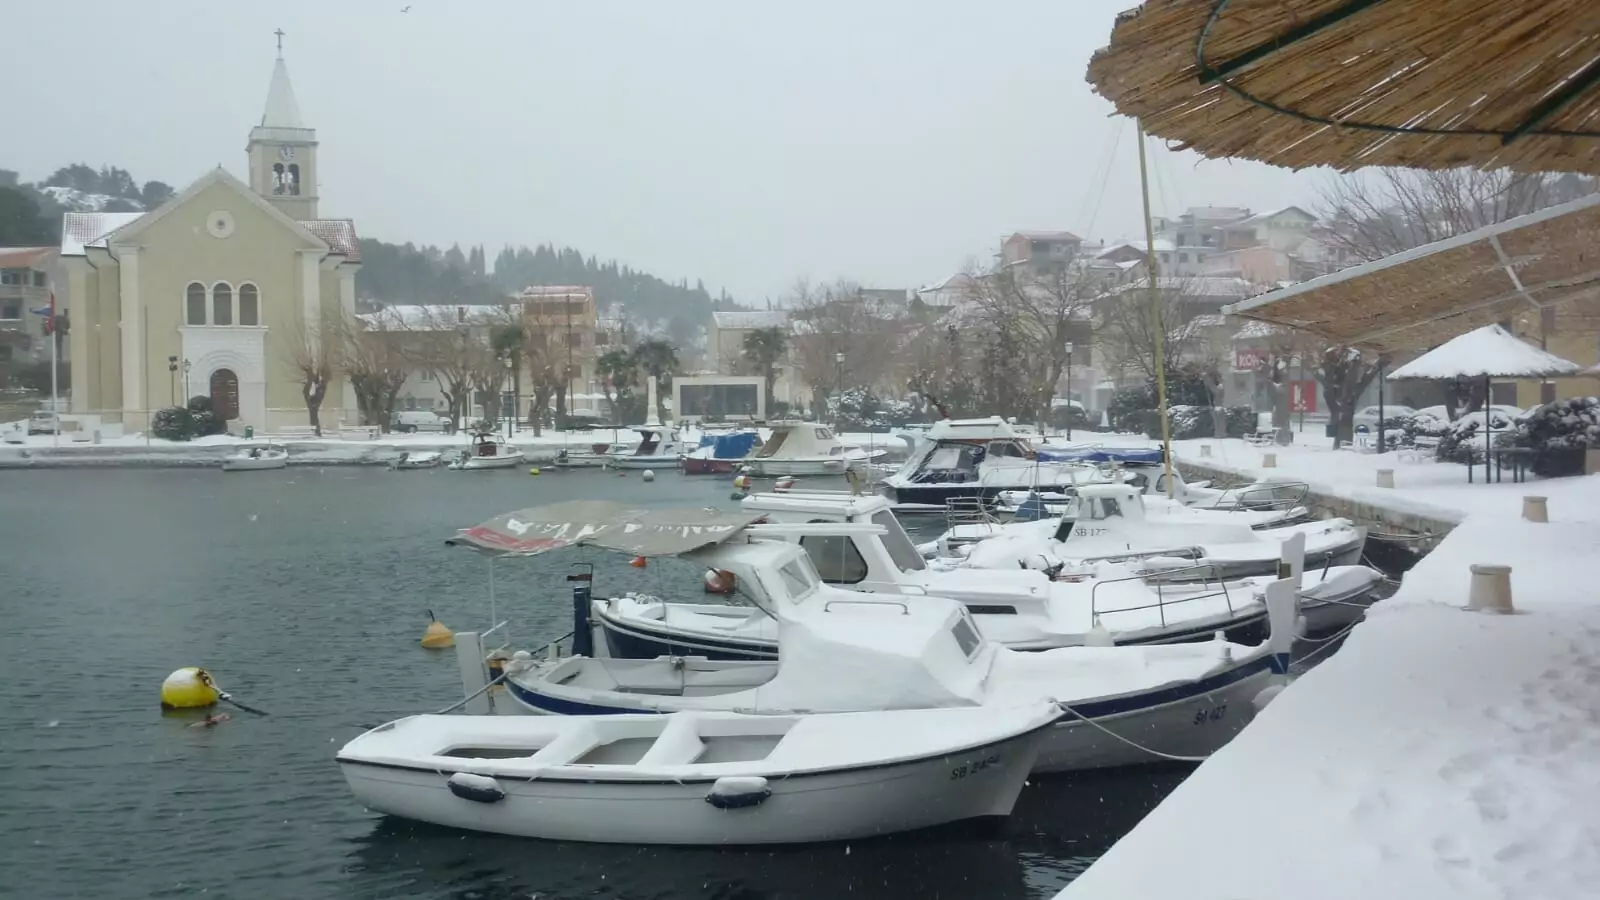 Winter in Dalmatien